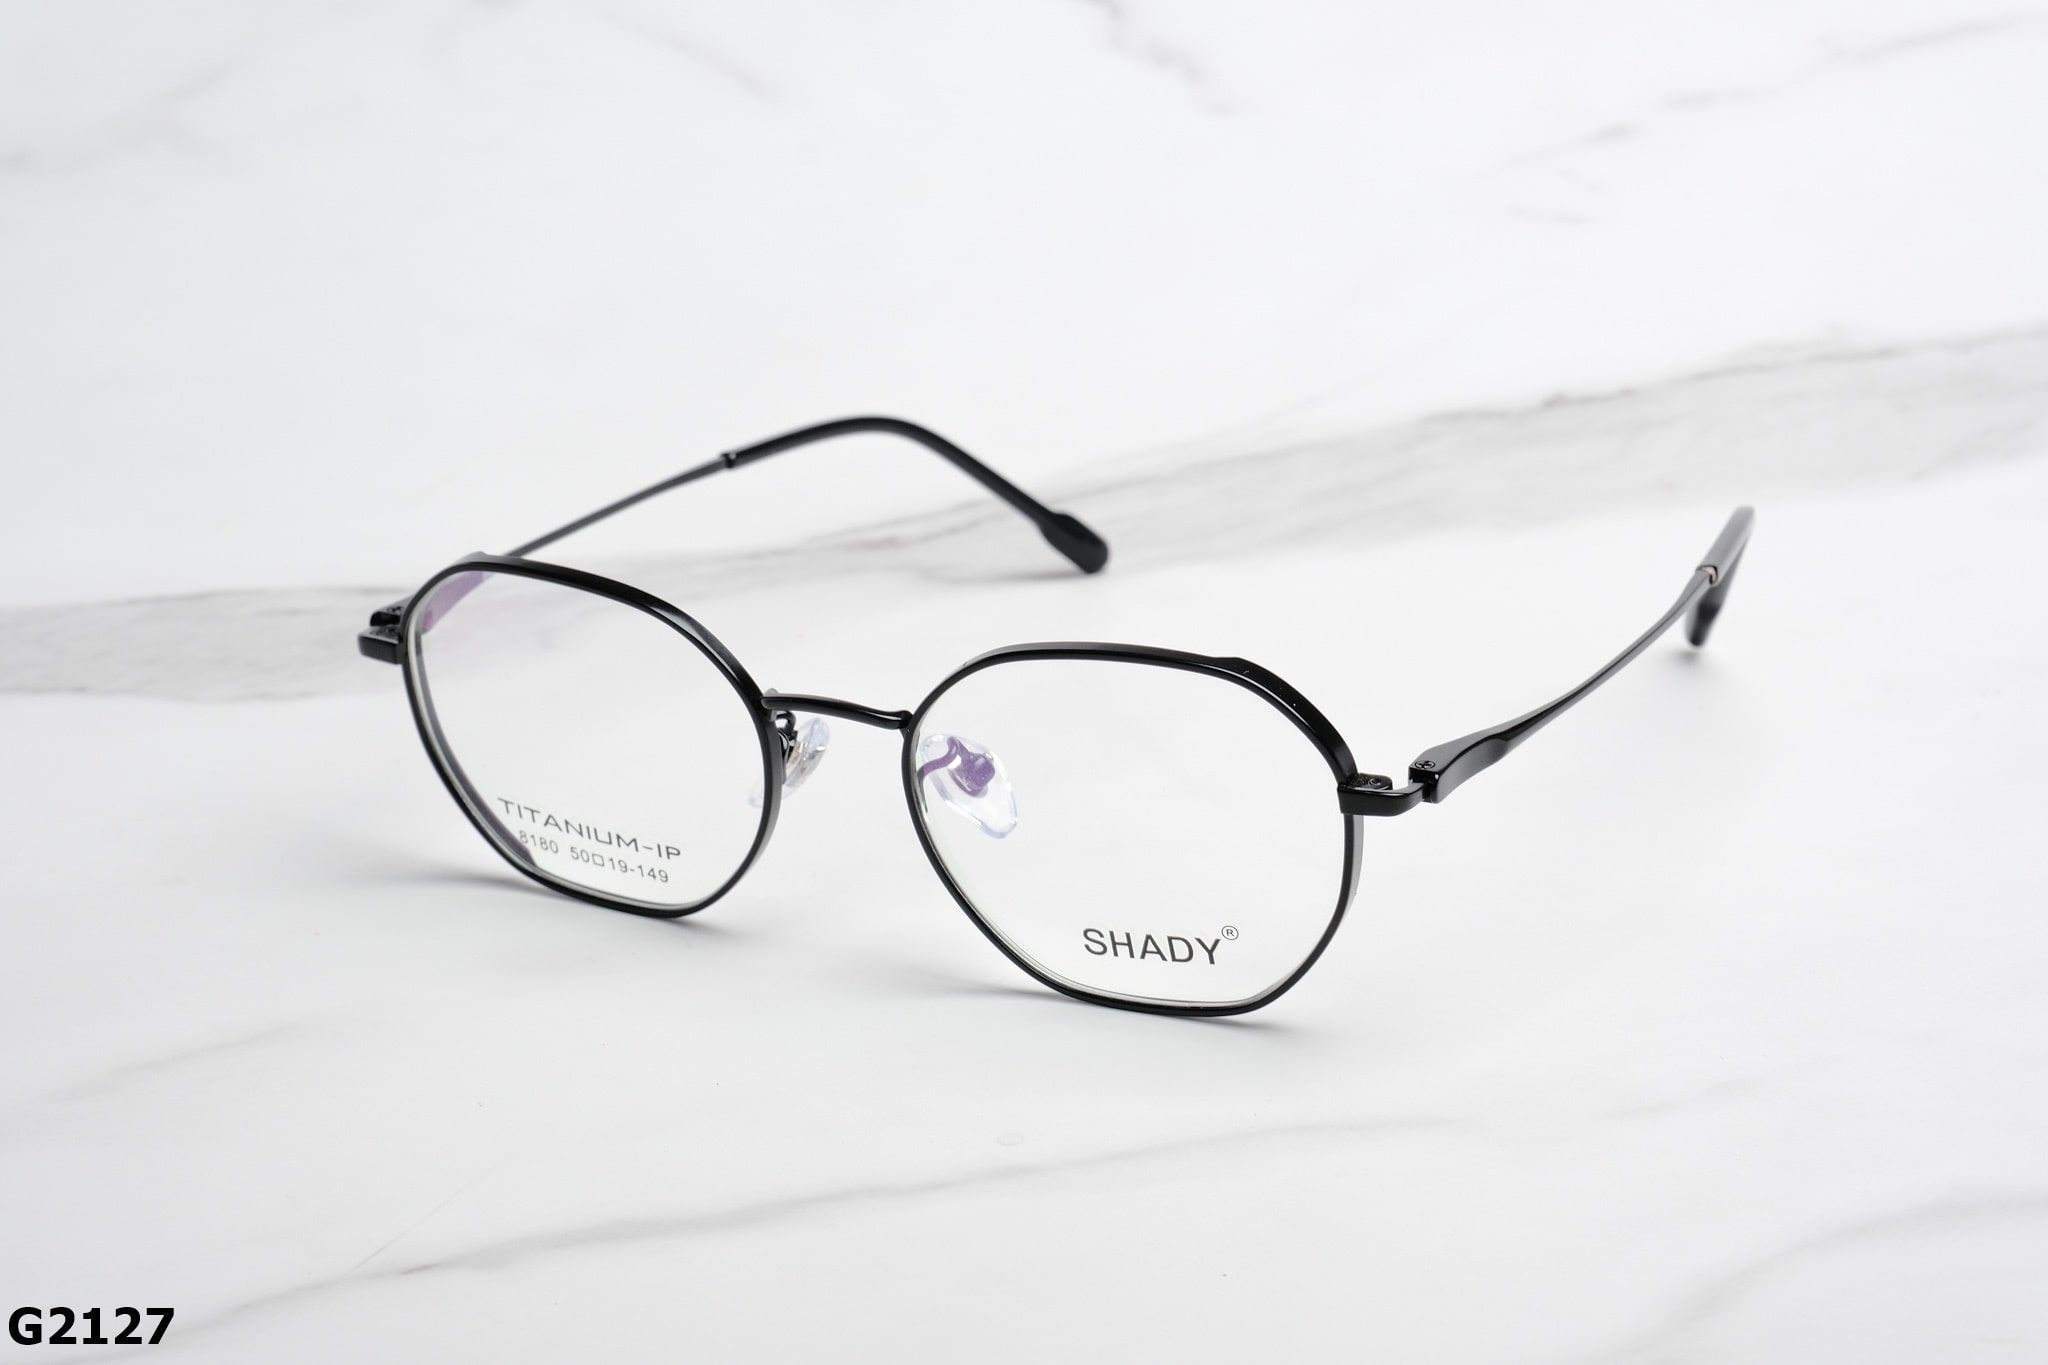  SHADY Eyewear - Glasses - G2127 